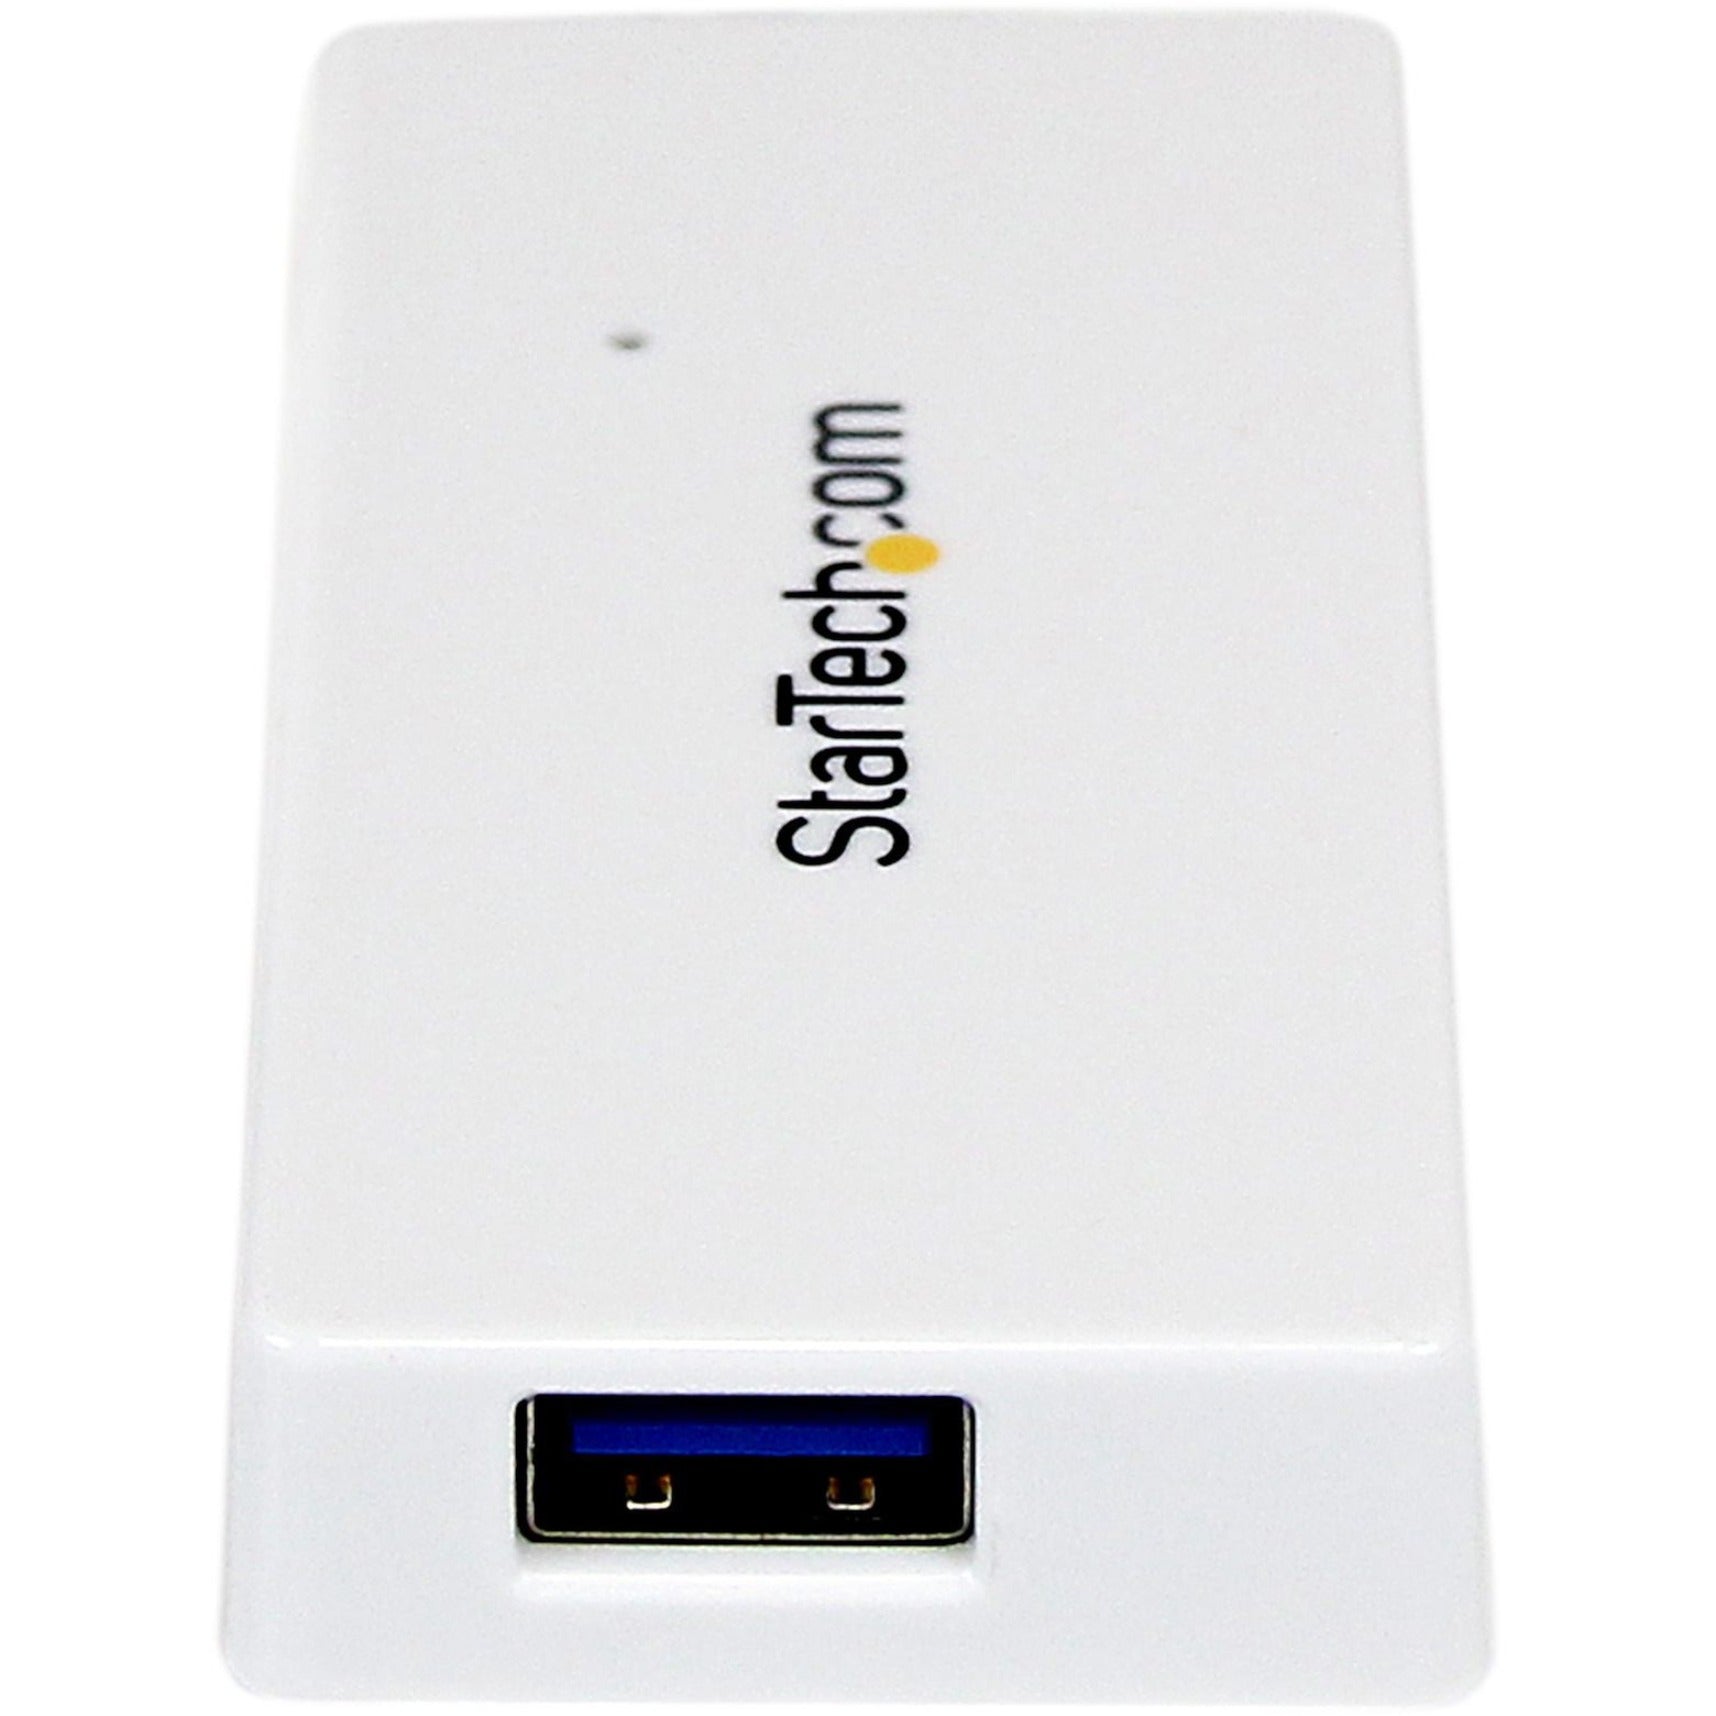 StarTech.com ST4300MINU3W Portable 4 Port SuperSpeed Mini USB 3.0 Hub - White, 2 Year Warranty, Mac/PC Compatible, Lightweight Design